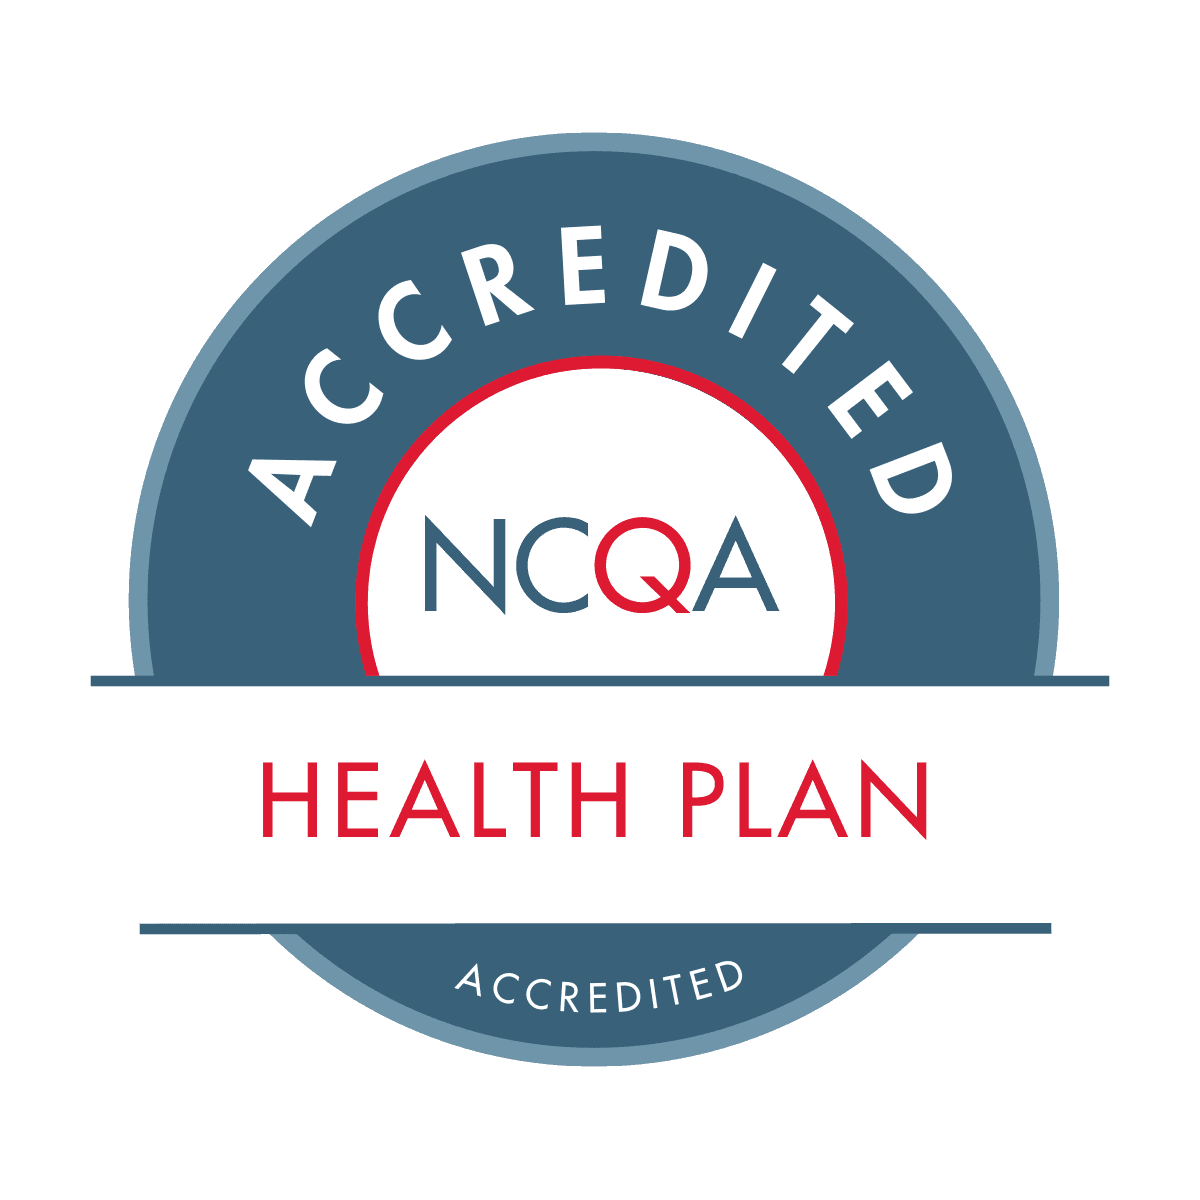 NCQA Accredited Health Plan.